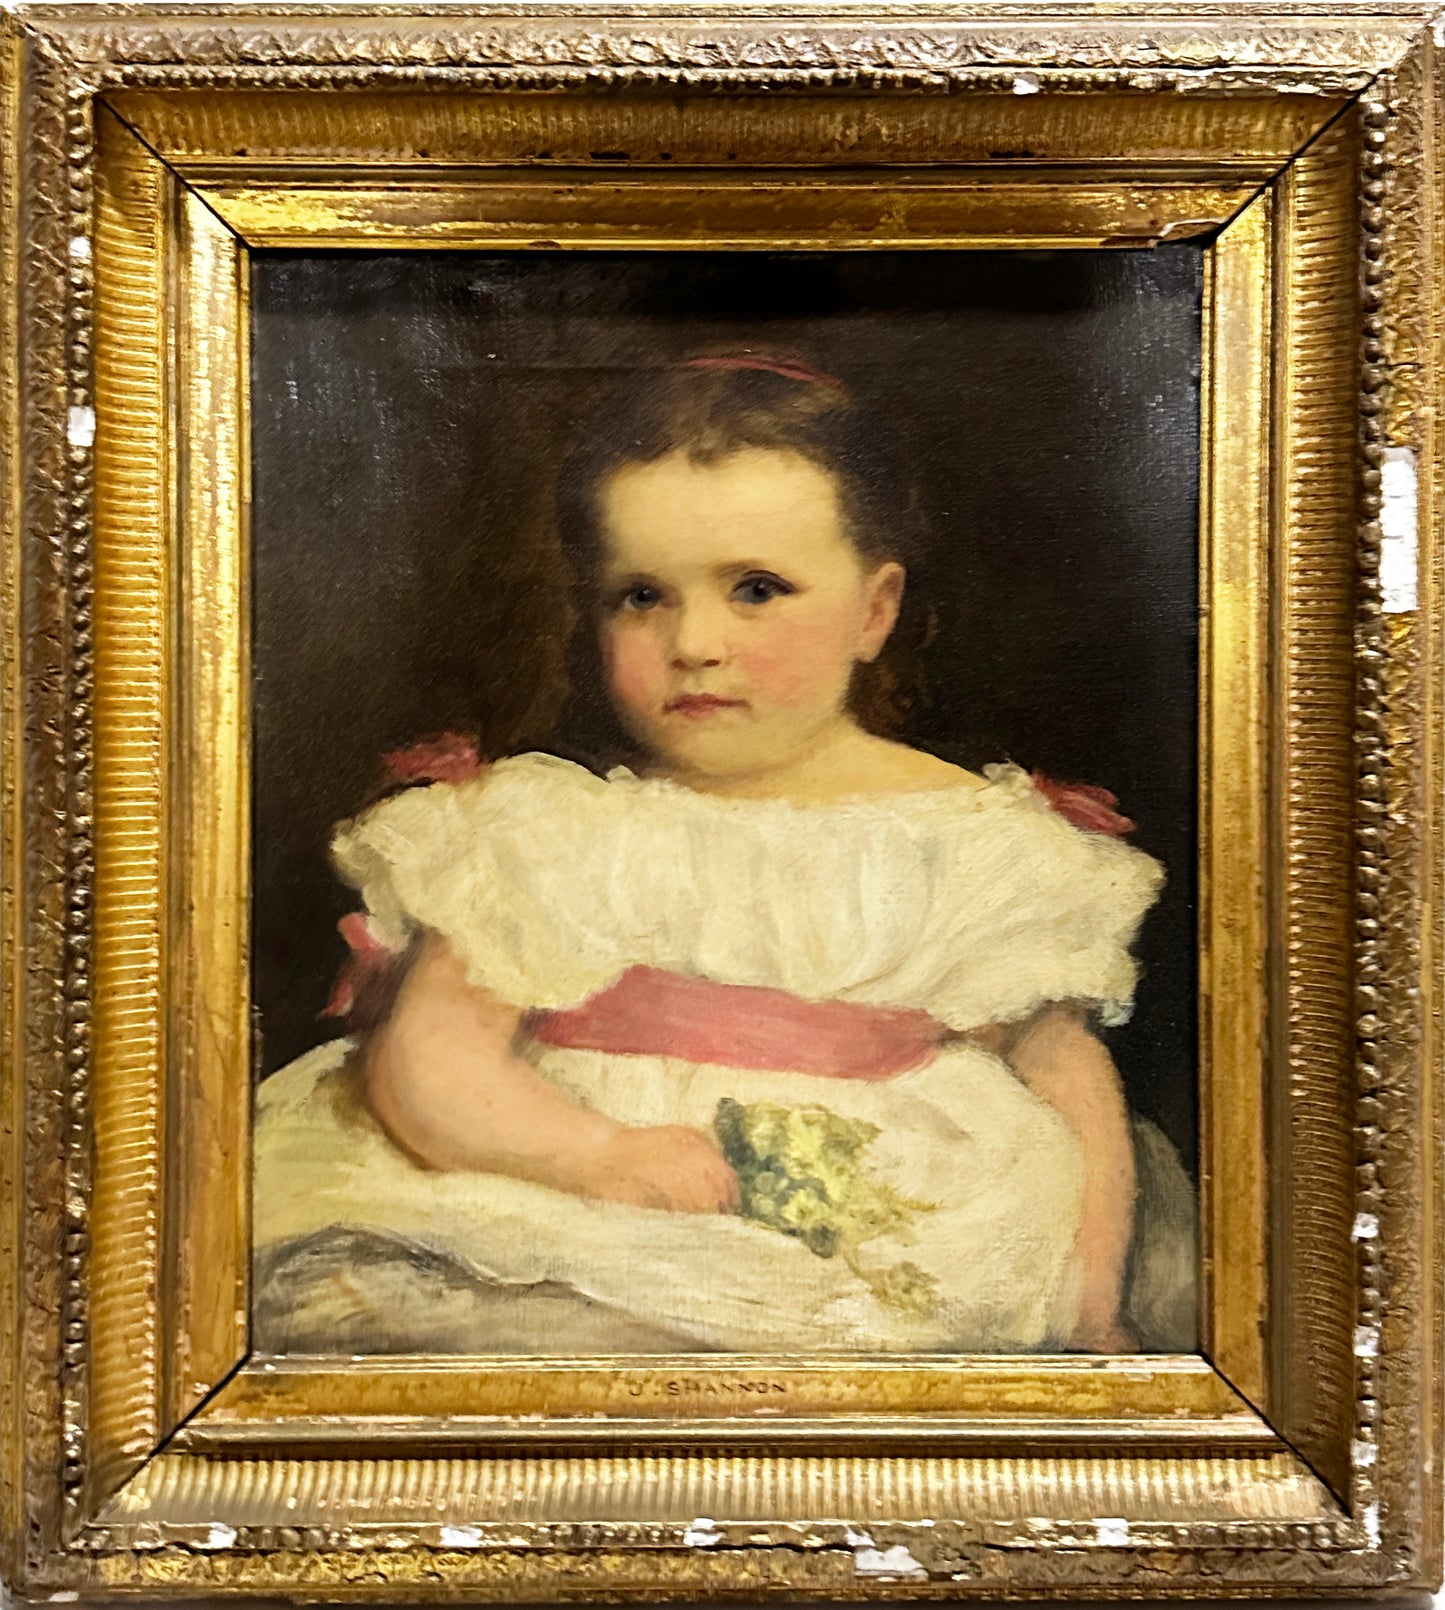 James Shannon Oil Painting: Portrait of a little girl